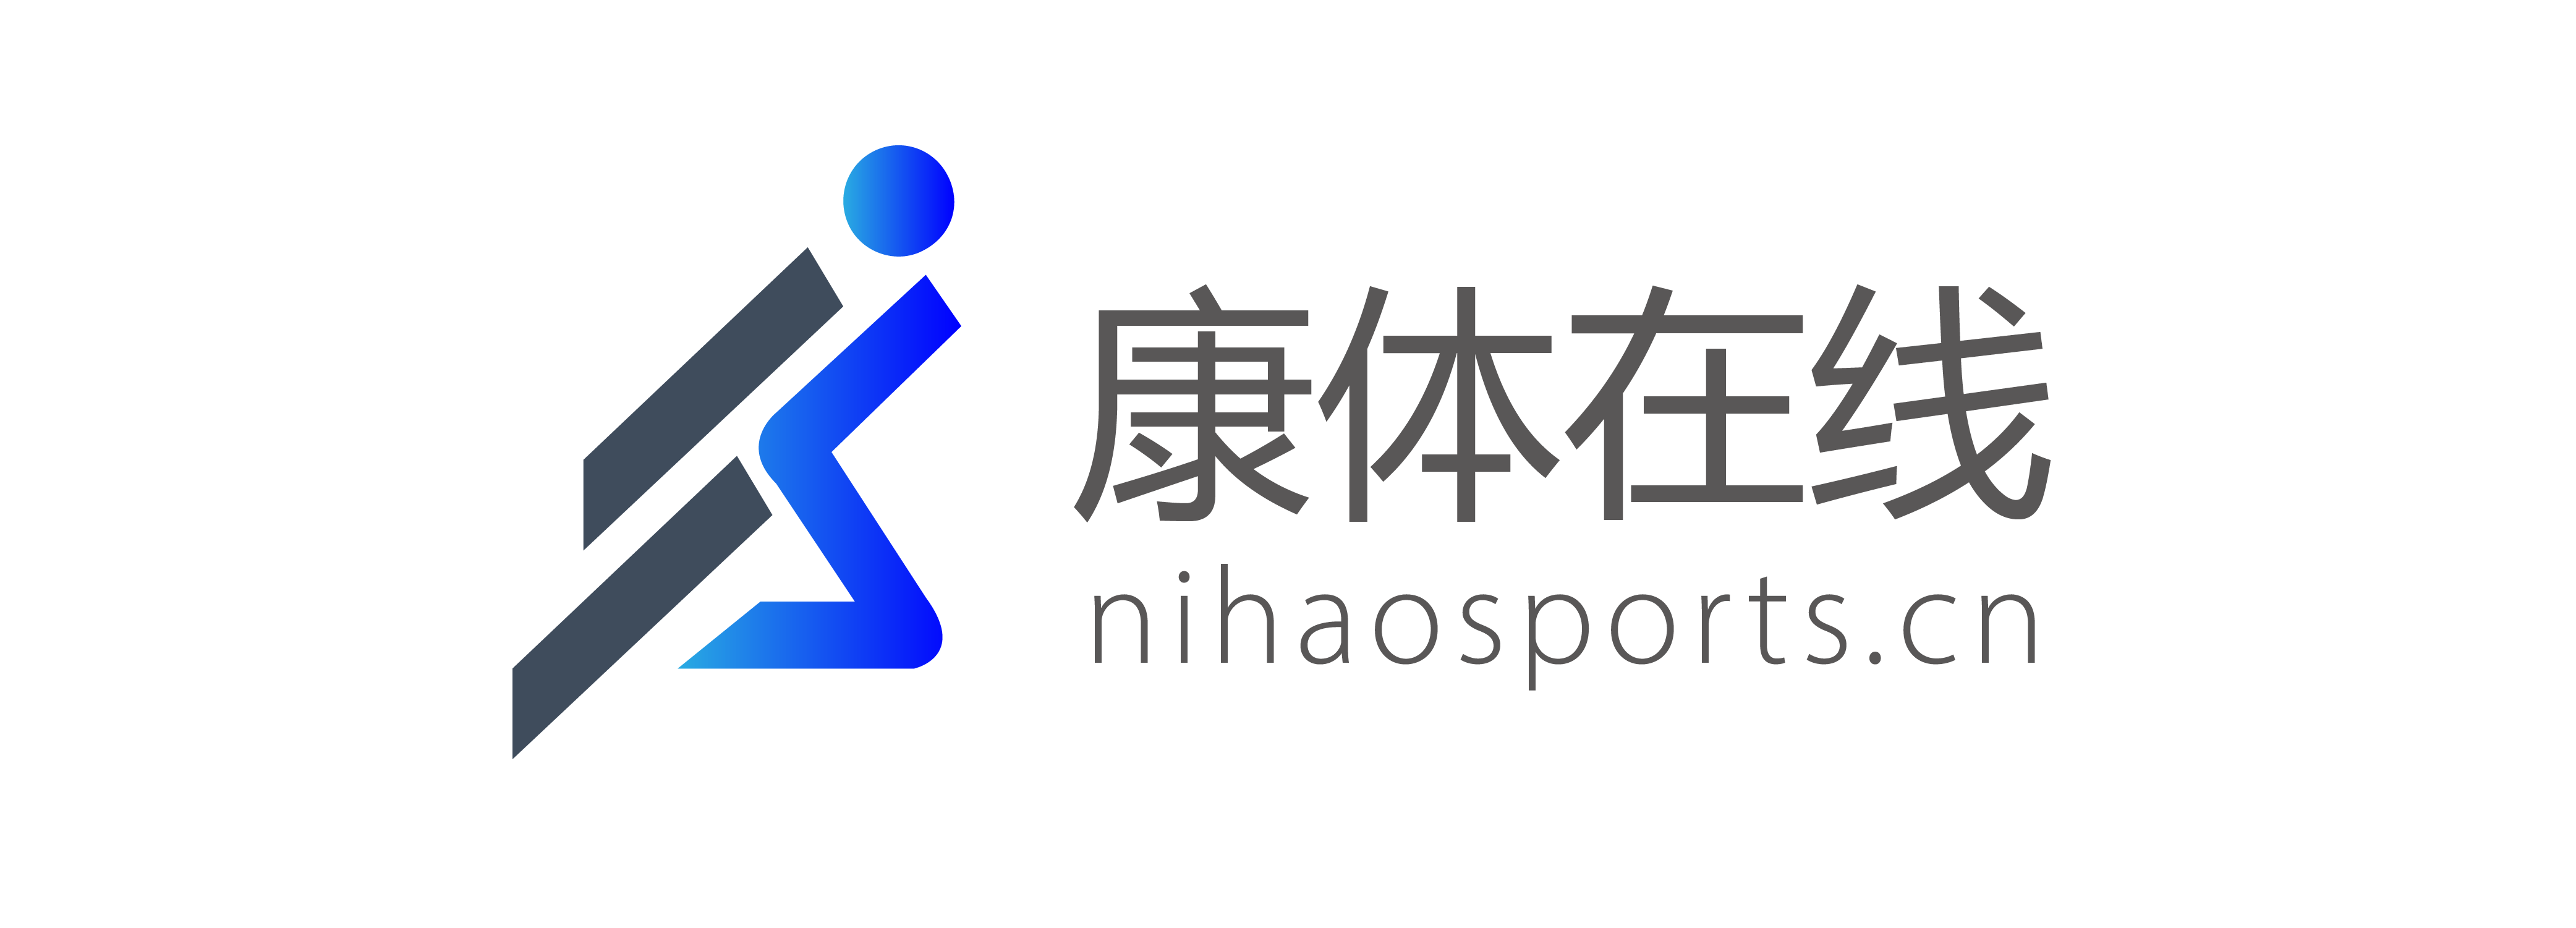 Forma di impianto B2B: Nihaosports